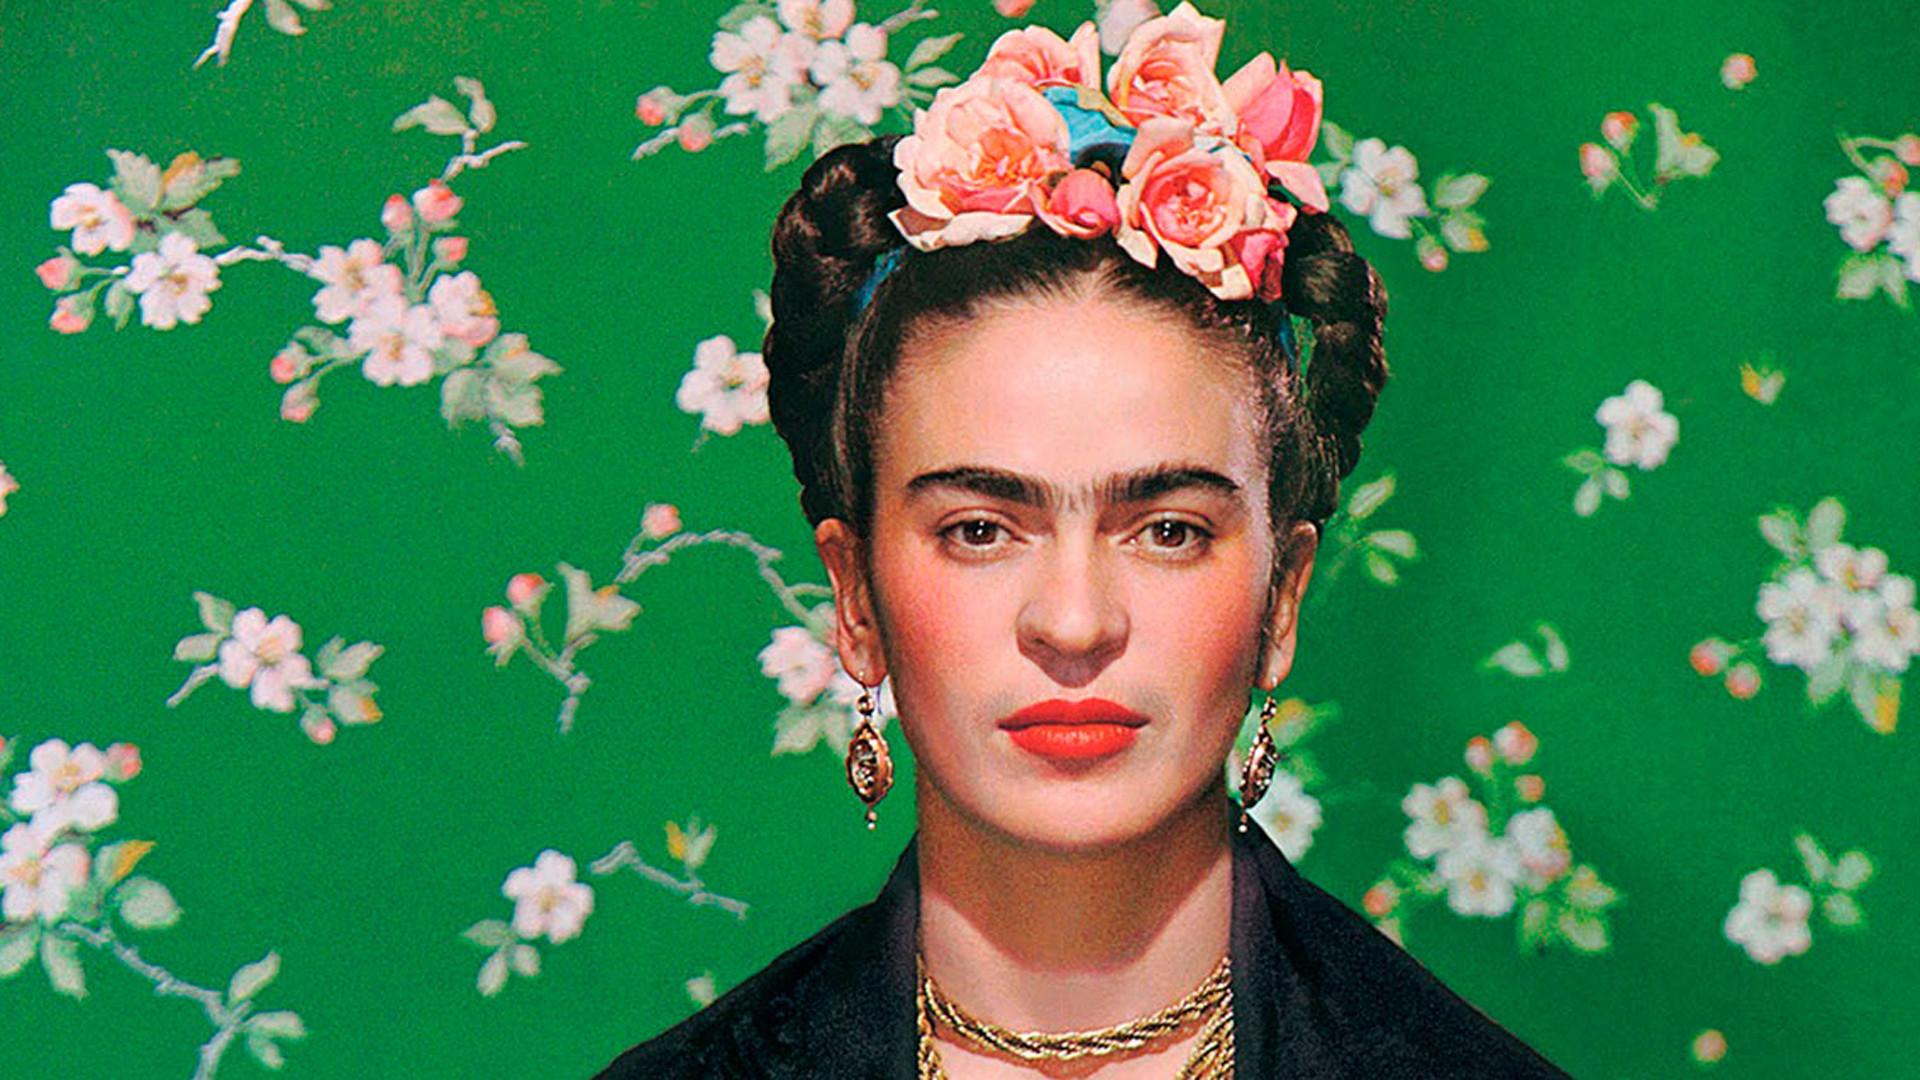 Frida Kahlo Wallpaper The Best Image In